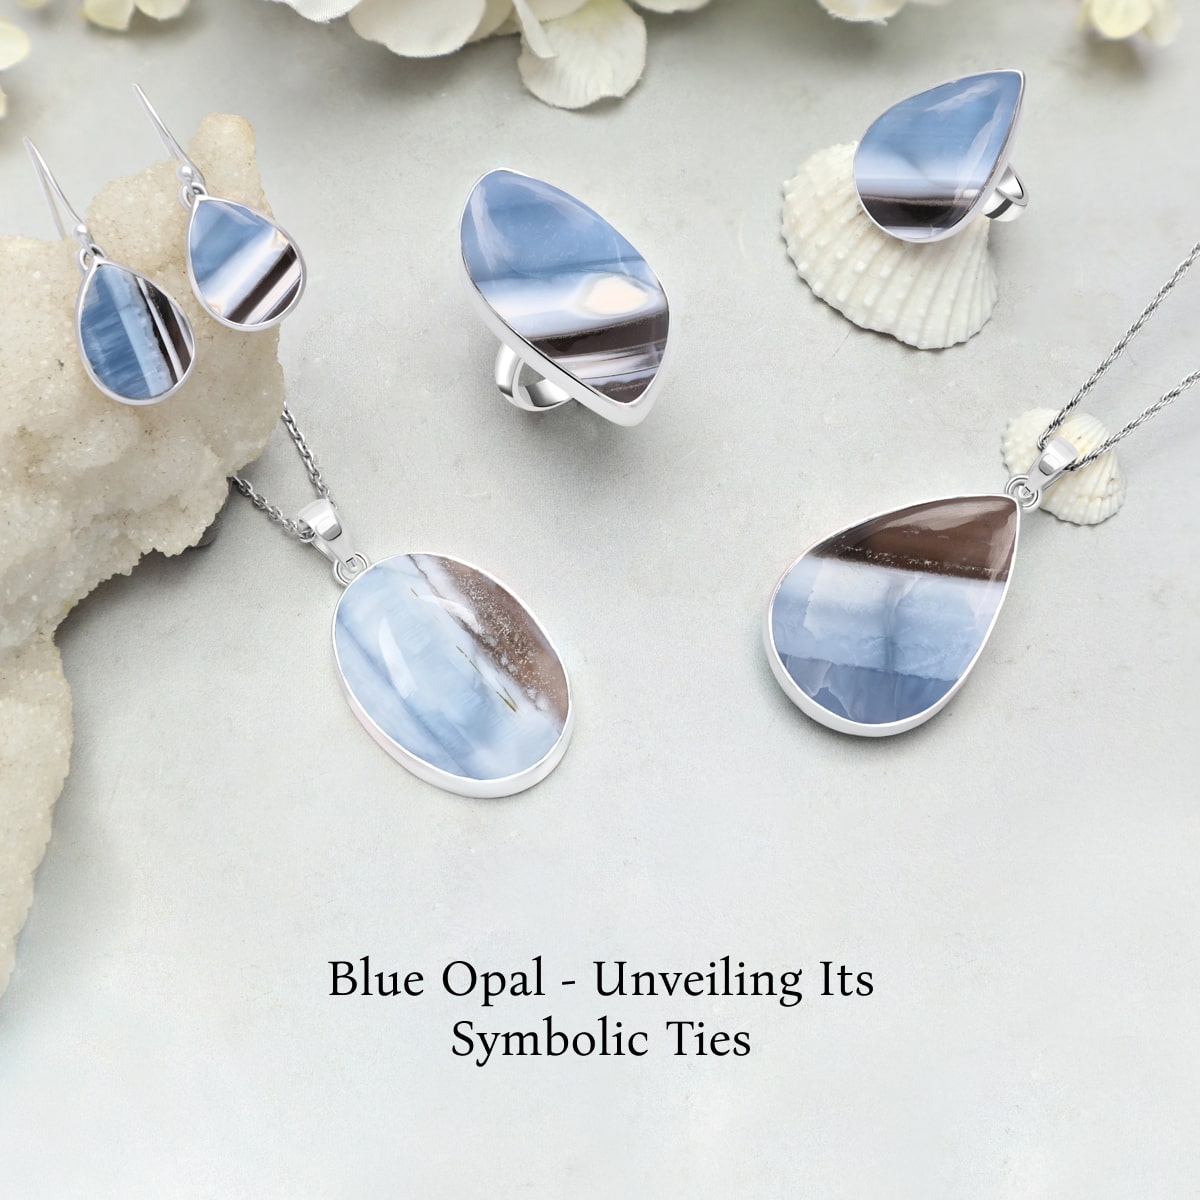 Blue Opal & Its Associations